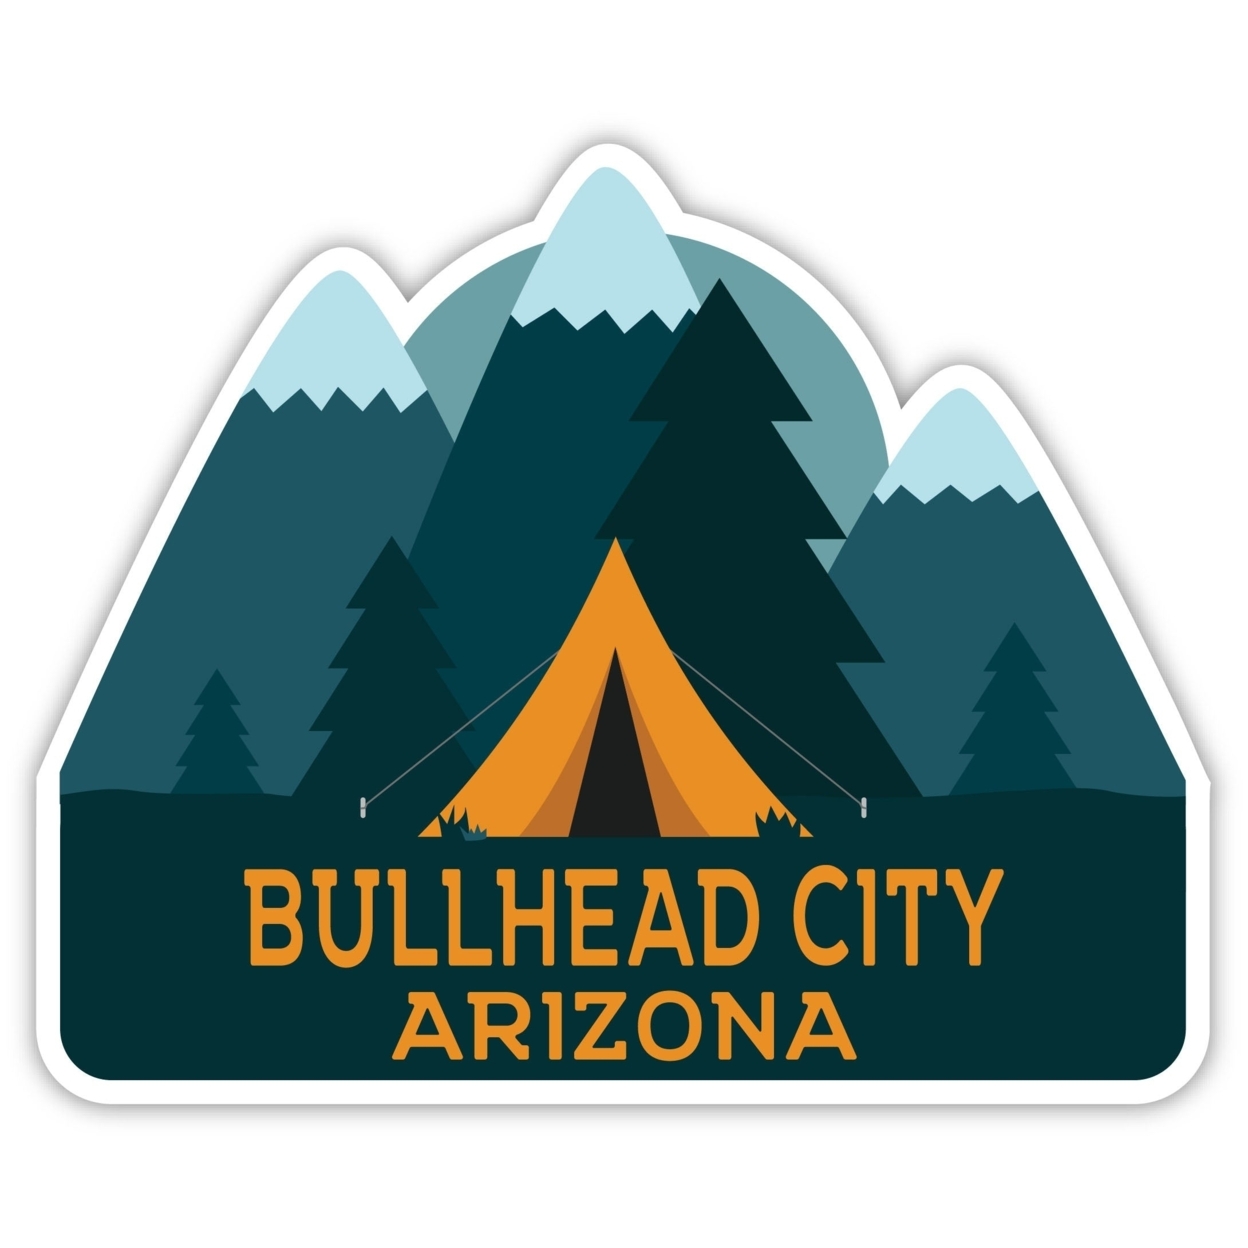 Bullhead City Arizona Souvenir Decorative Stickers (Choose Theme And Size) - Single Unit, 10-Inch, Camp Life